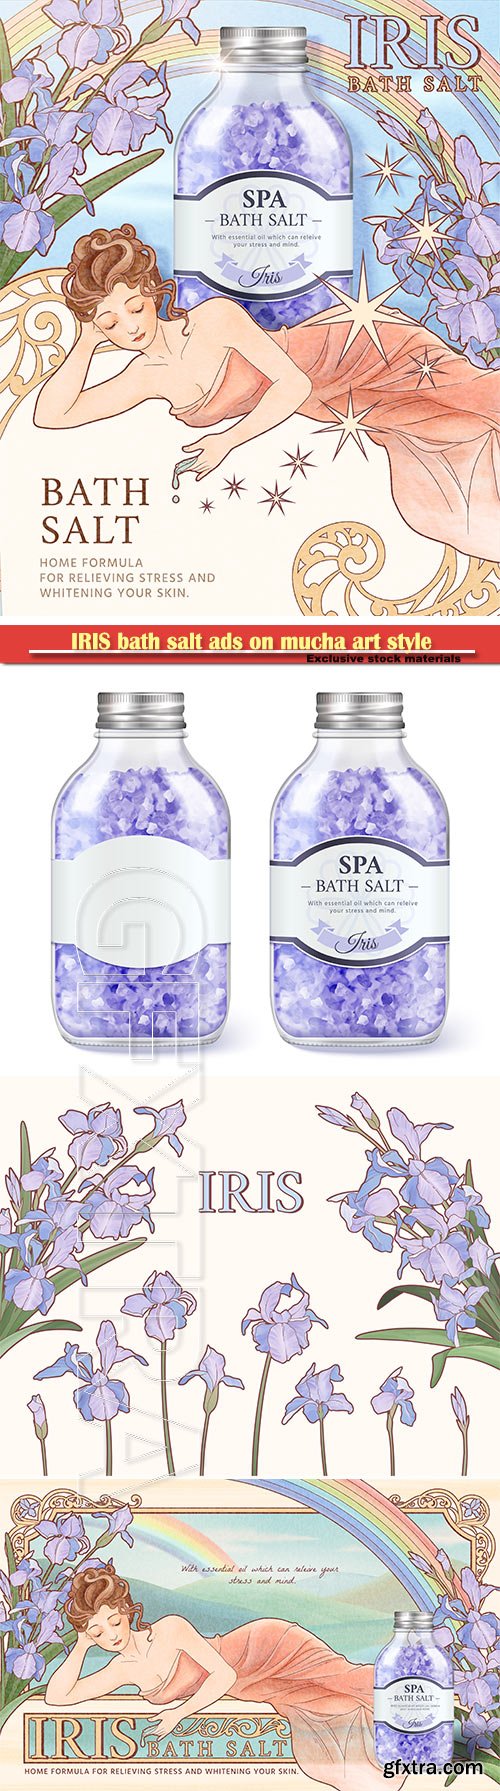 IRIS bath salt ads on mucha art style background, woman side lying with purple flowers